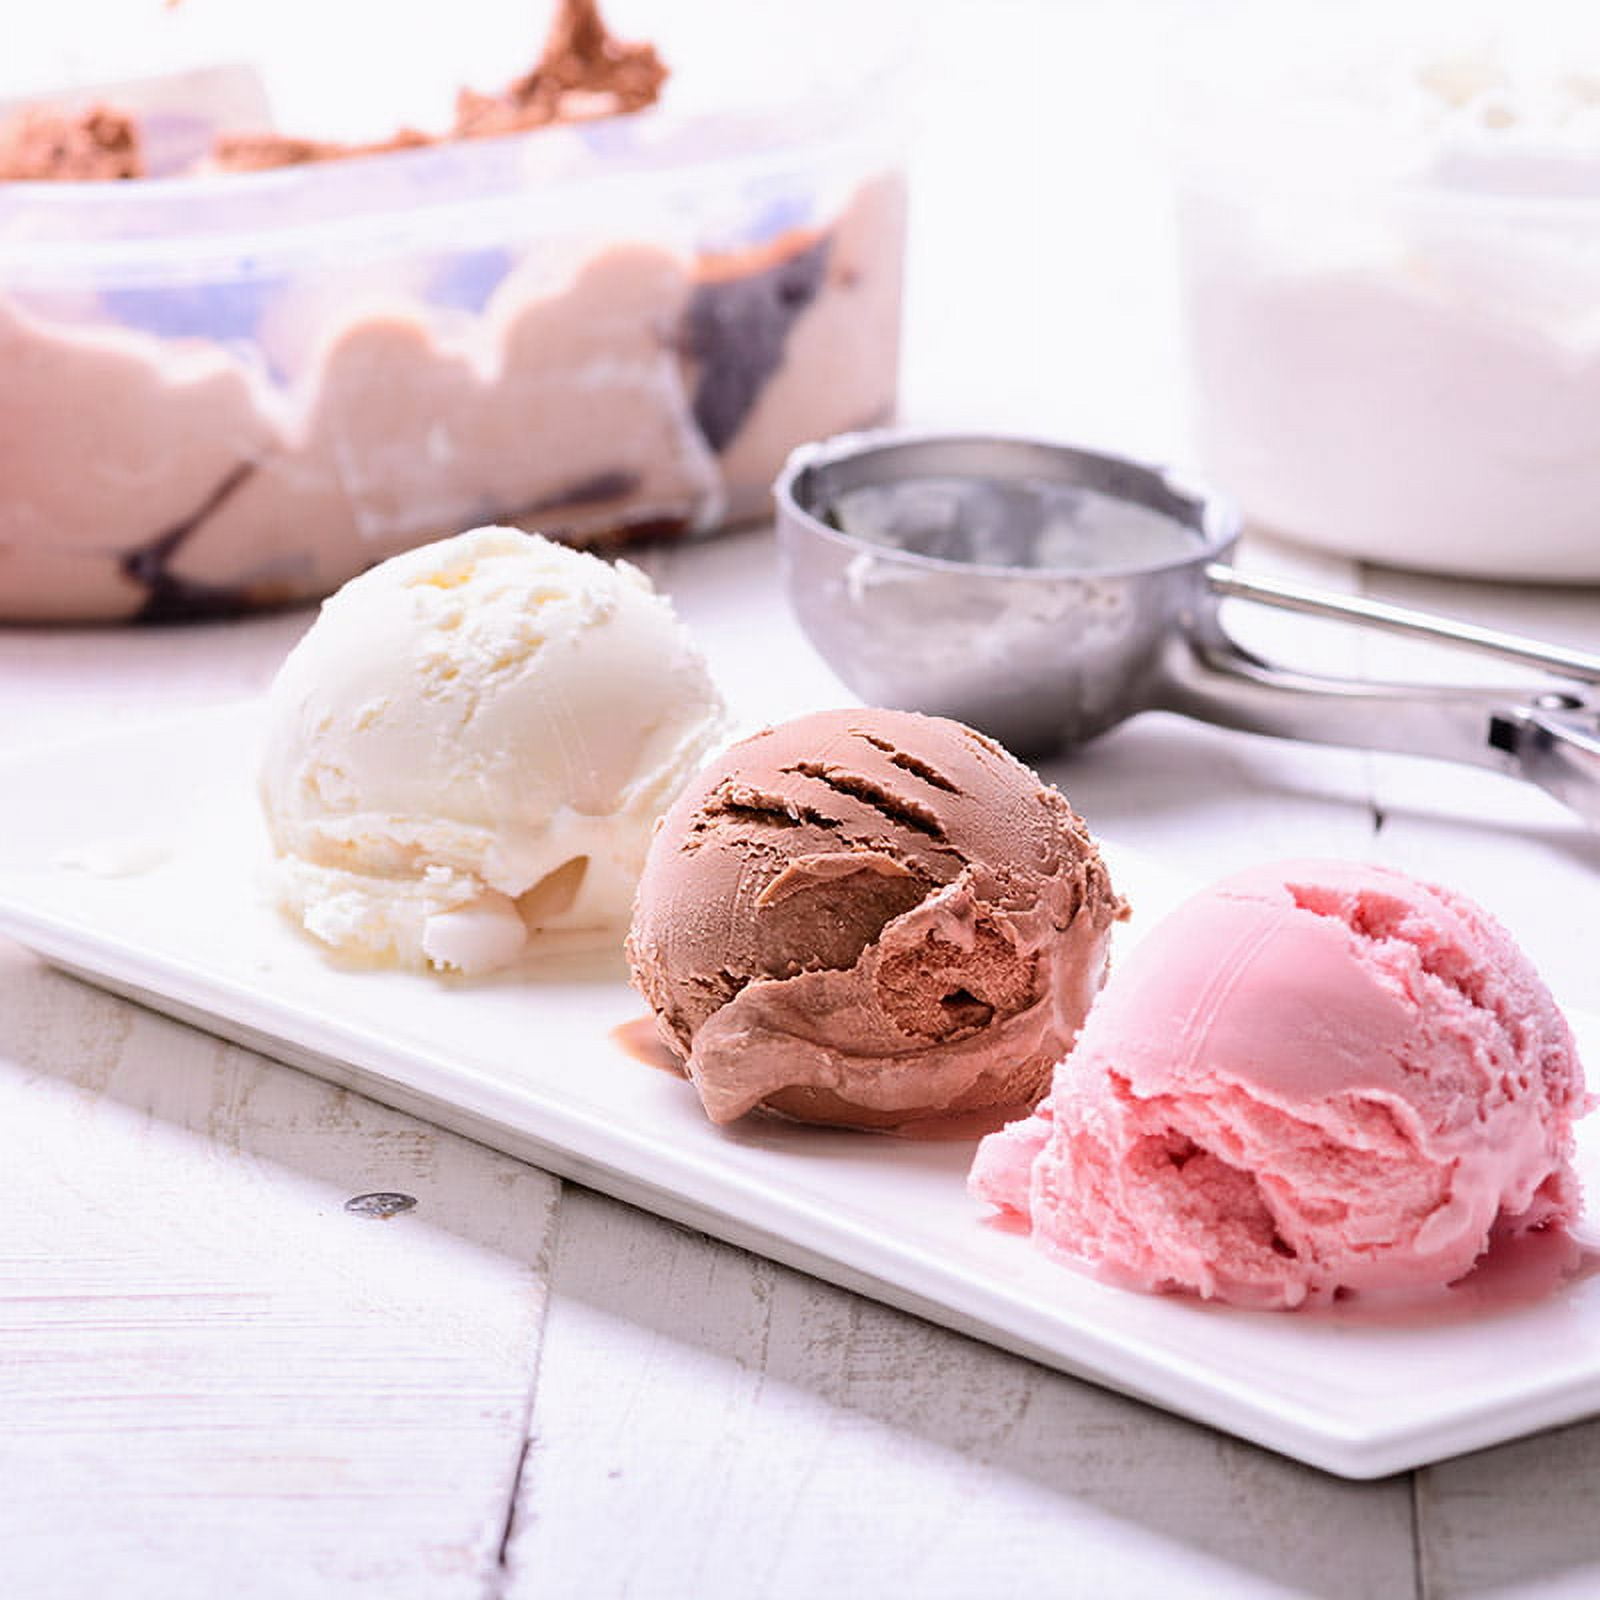 Buy VDNSI Stainless Steel Ice Cream Scoop Fruit Scooper for